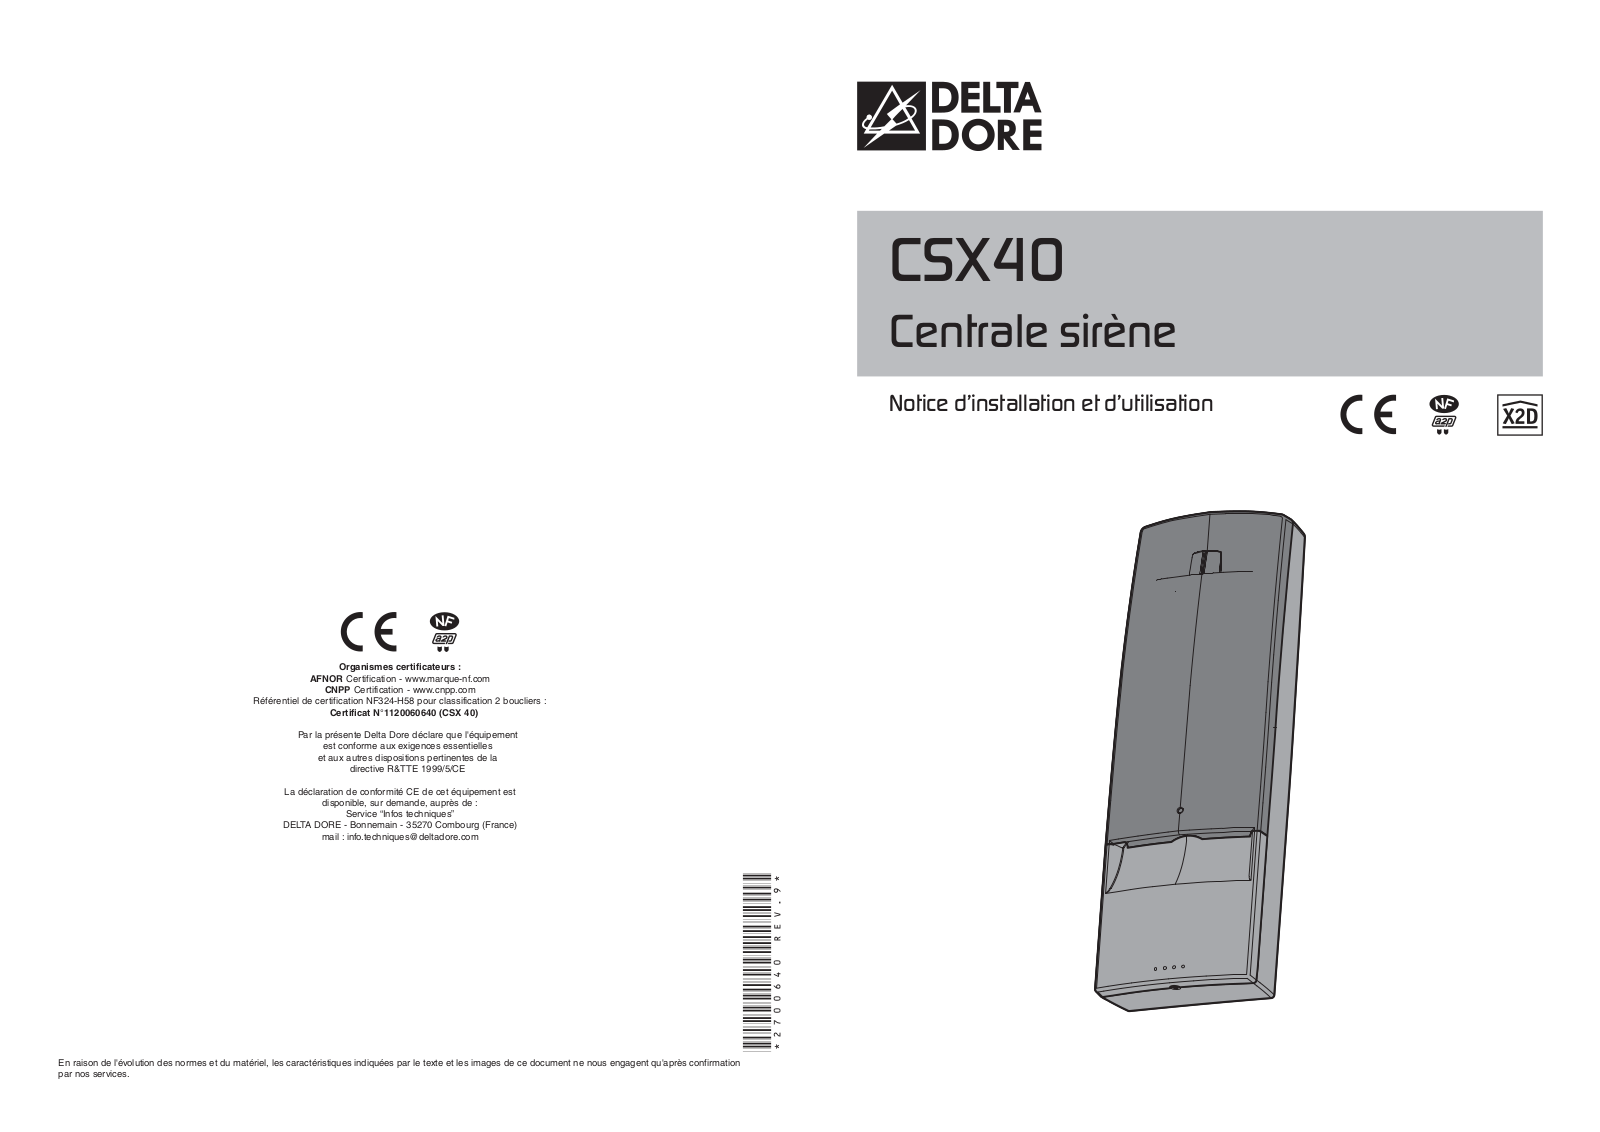 DELTA DORE CSX 40 User Manual